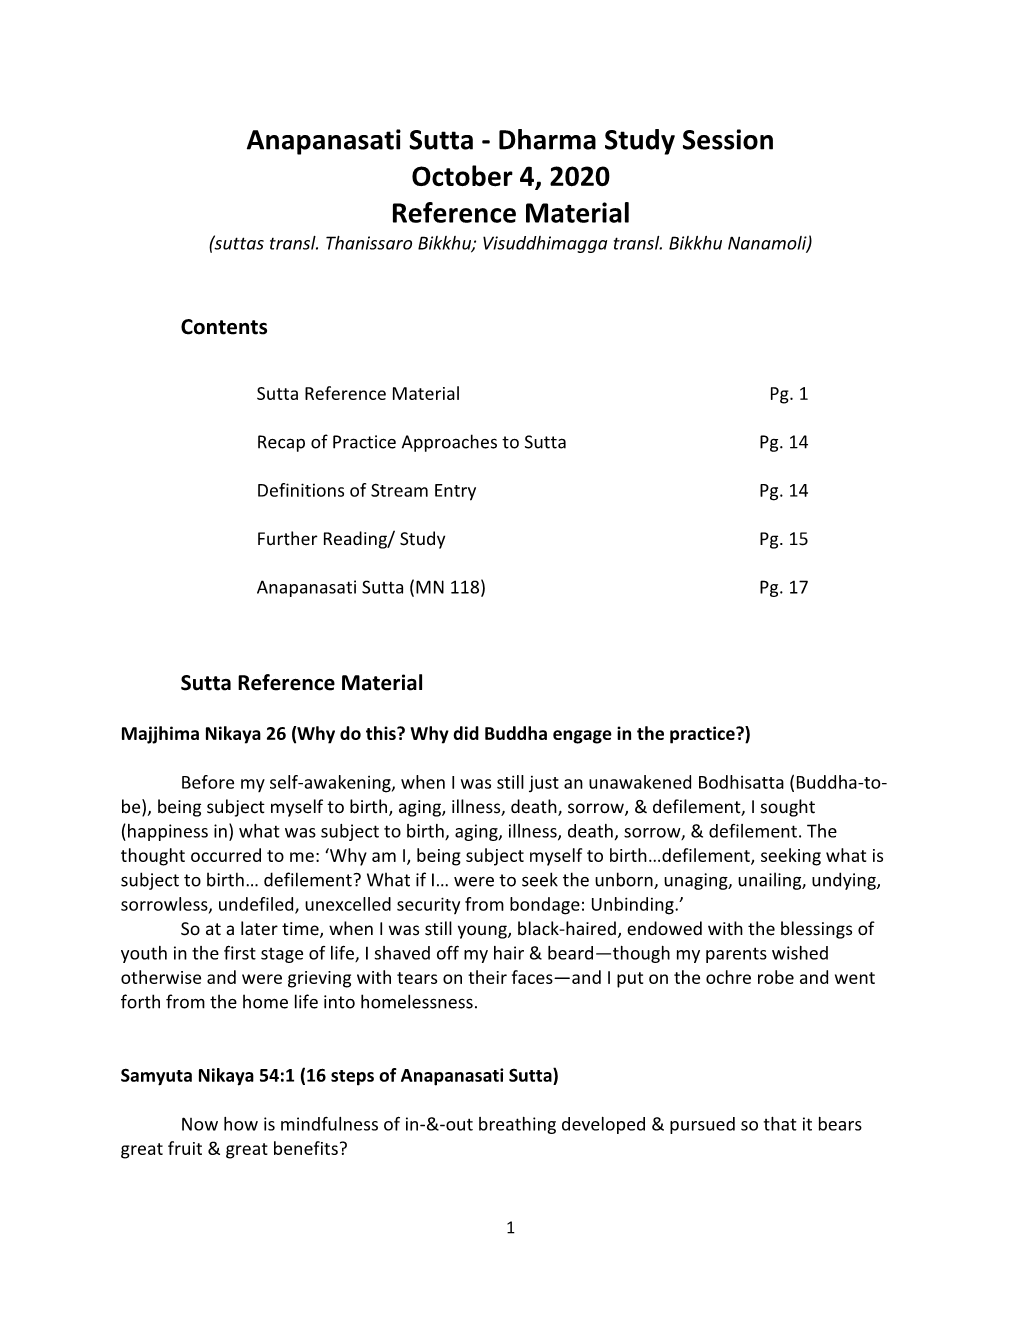 Anapanasati Sutta - Dharma Study Session October 4, 2020 Reference Material (Suttas Transl